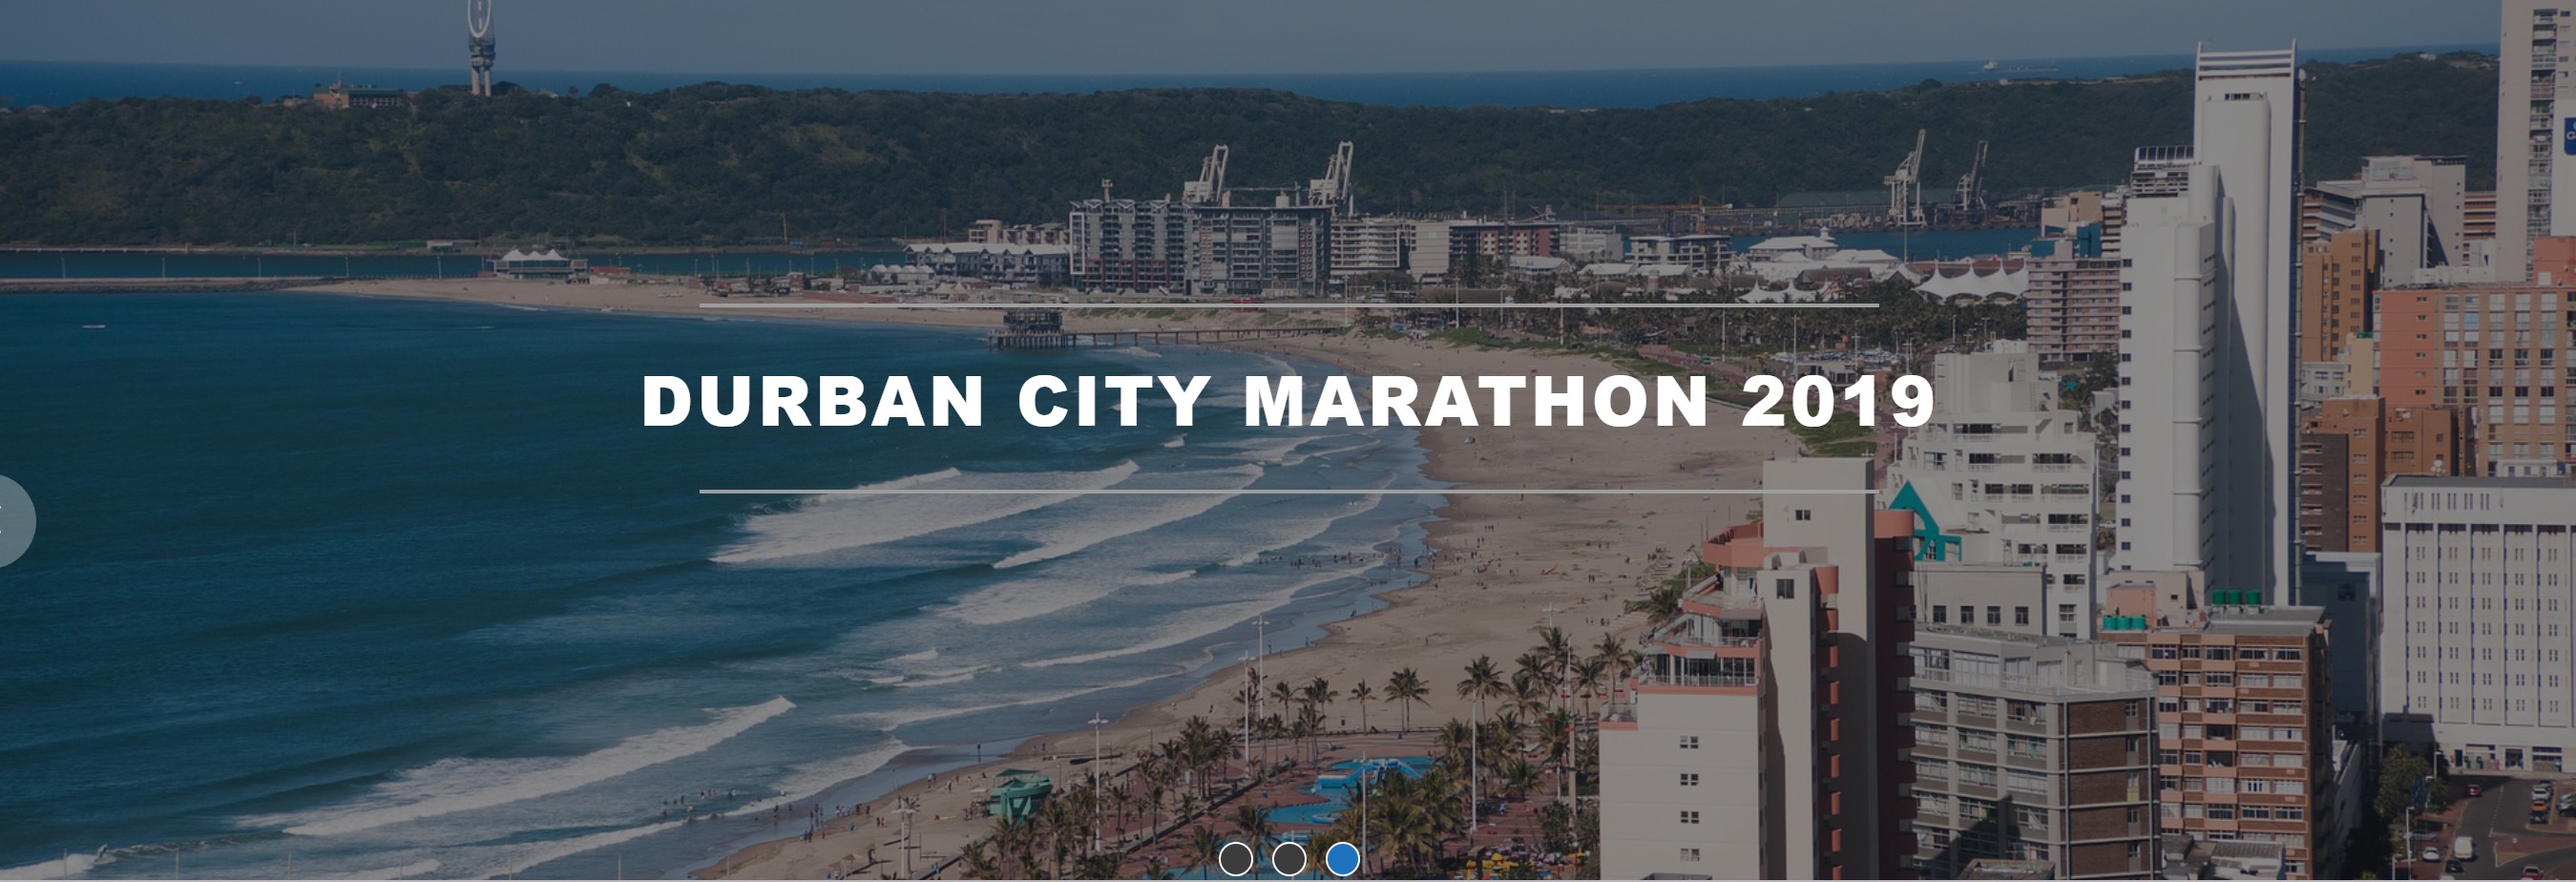 Durban City Marathon Logo